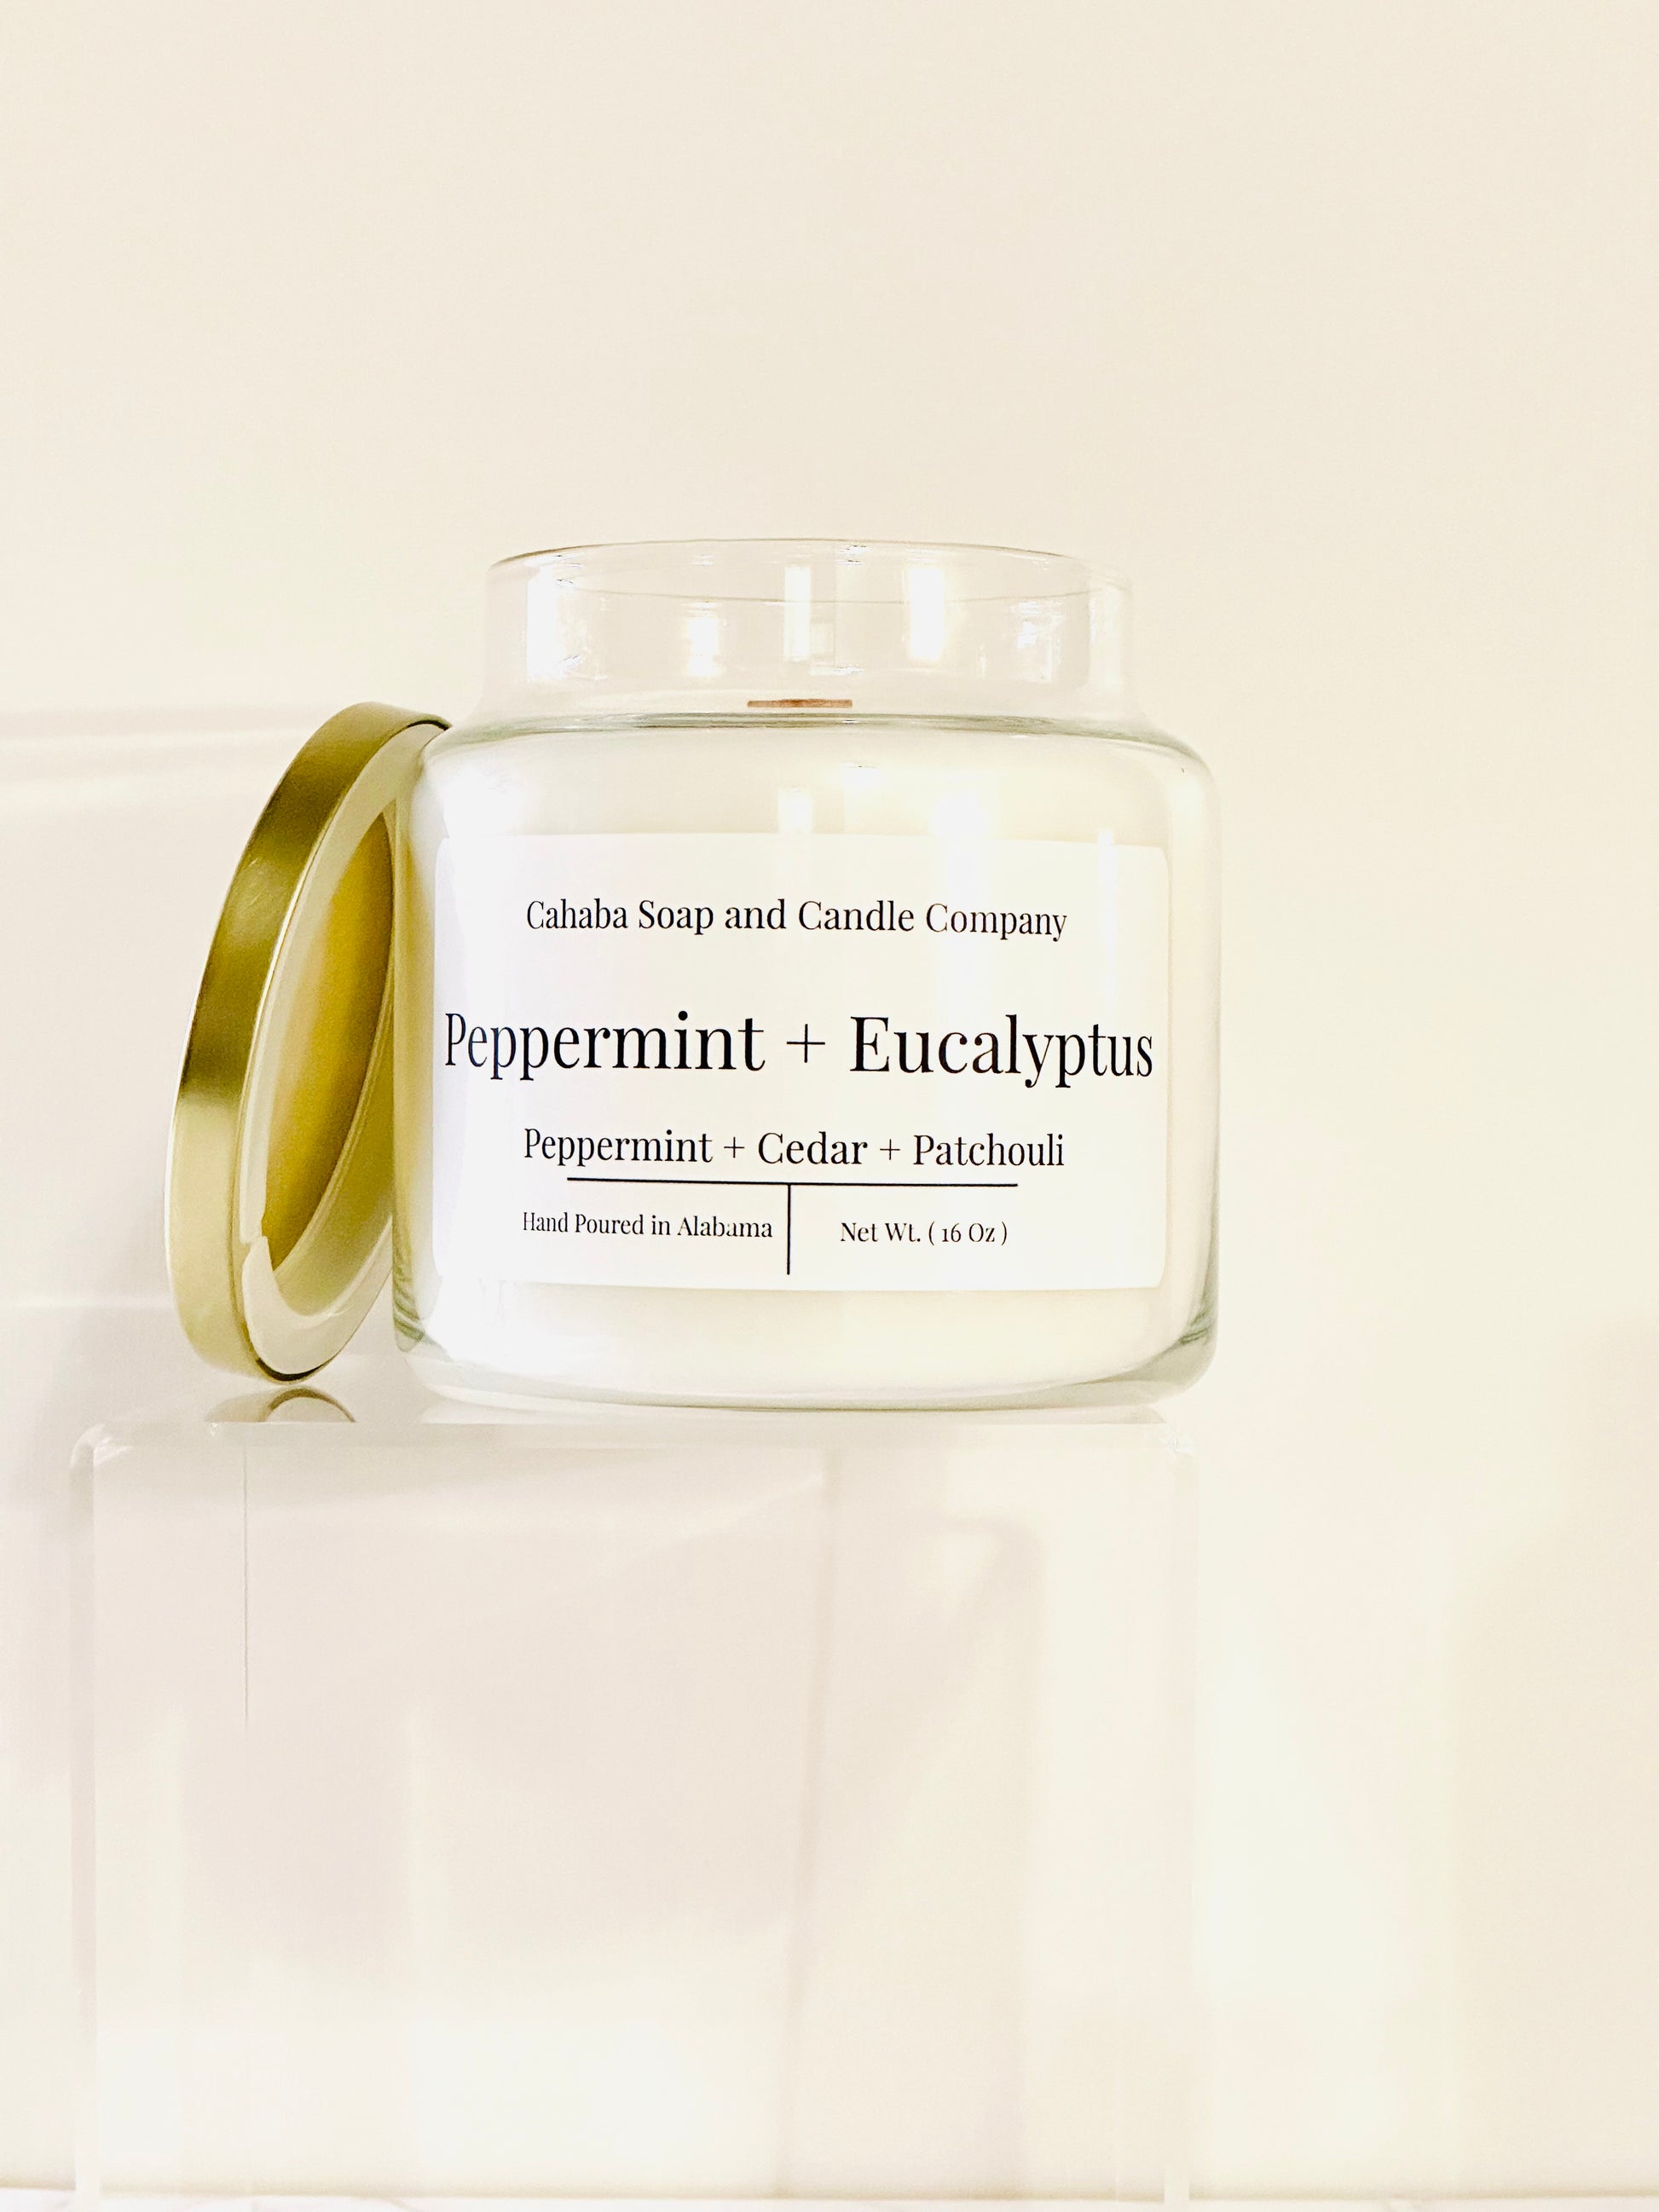 Peppermint + Eucalyptus - Cahaba Soap and Candle Company